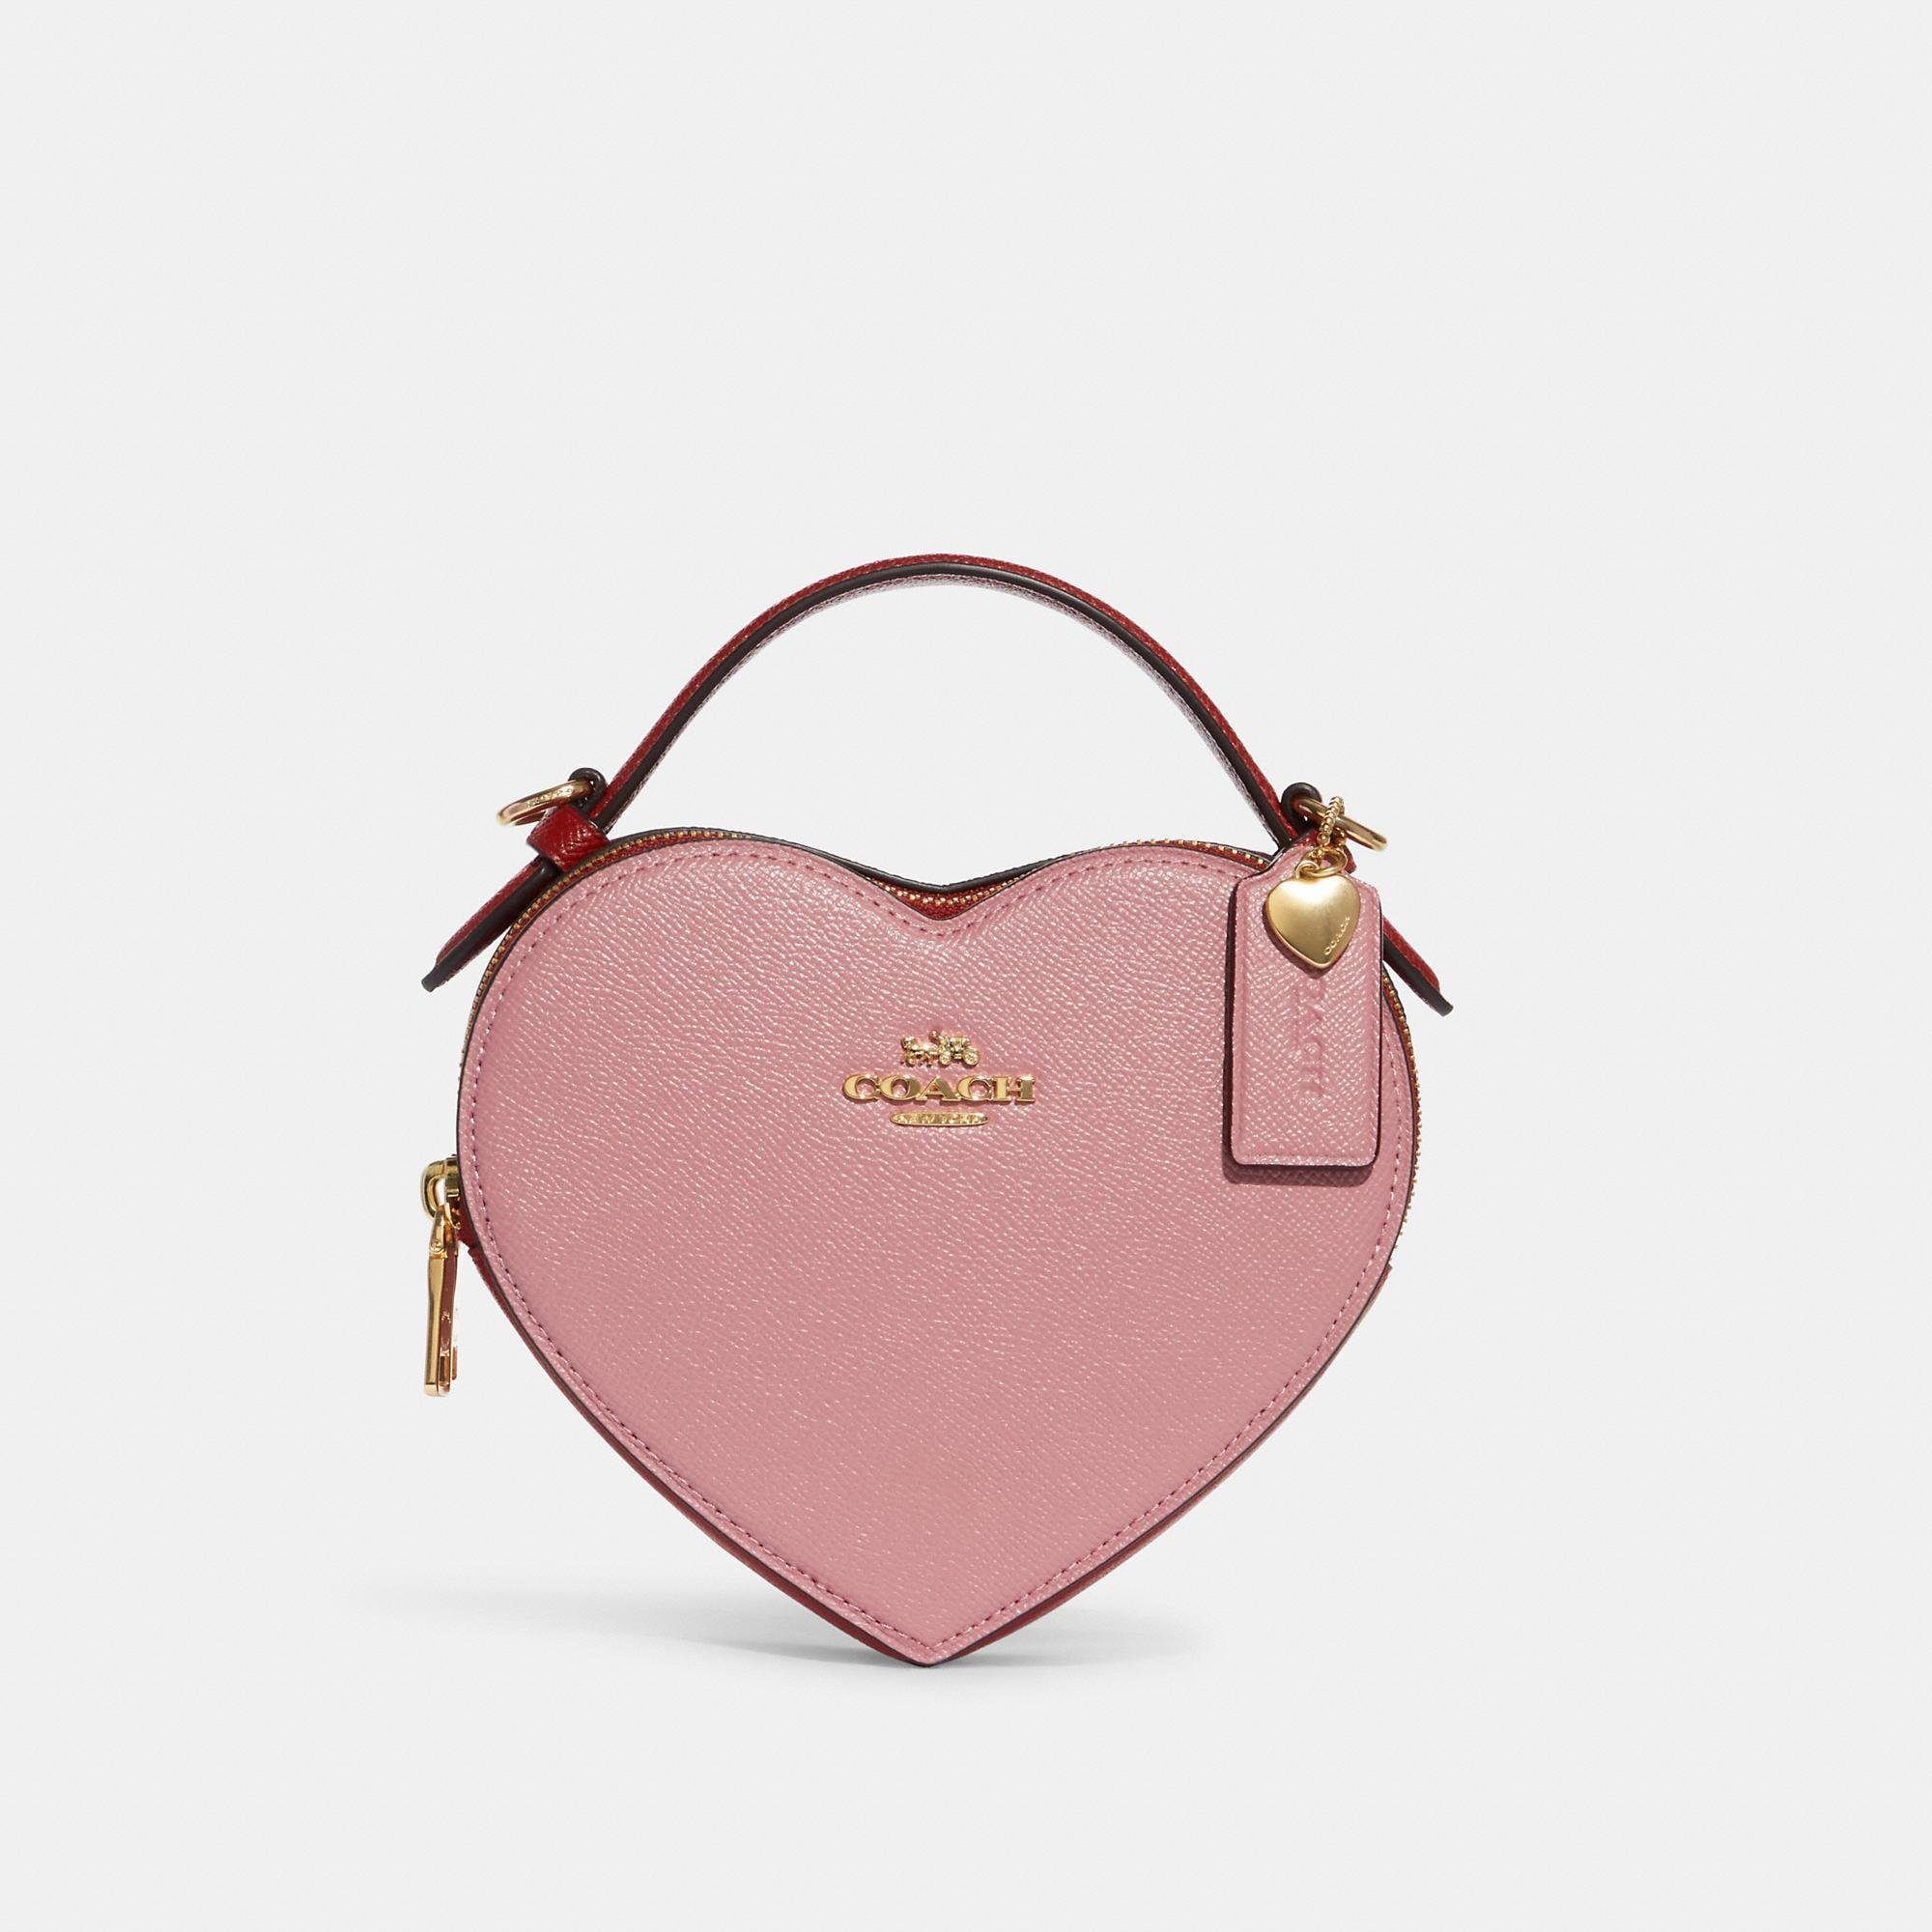 Introducir 39+ imagen pink coach handbags